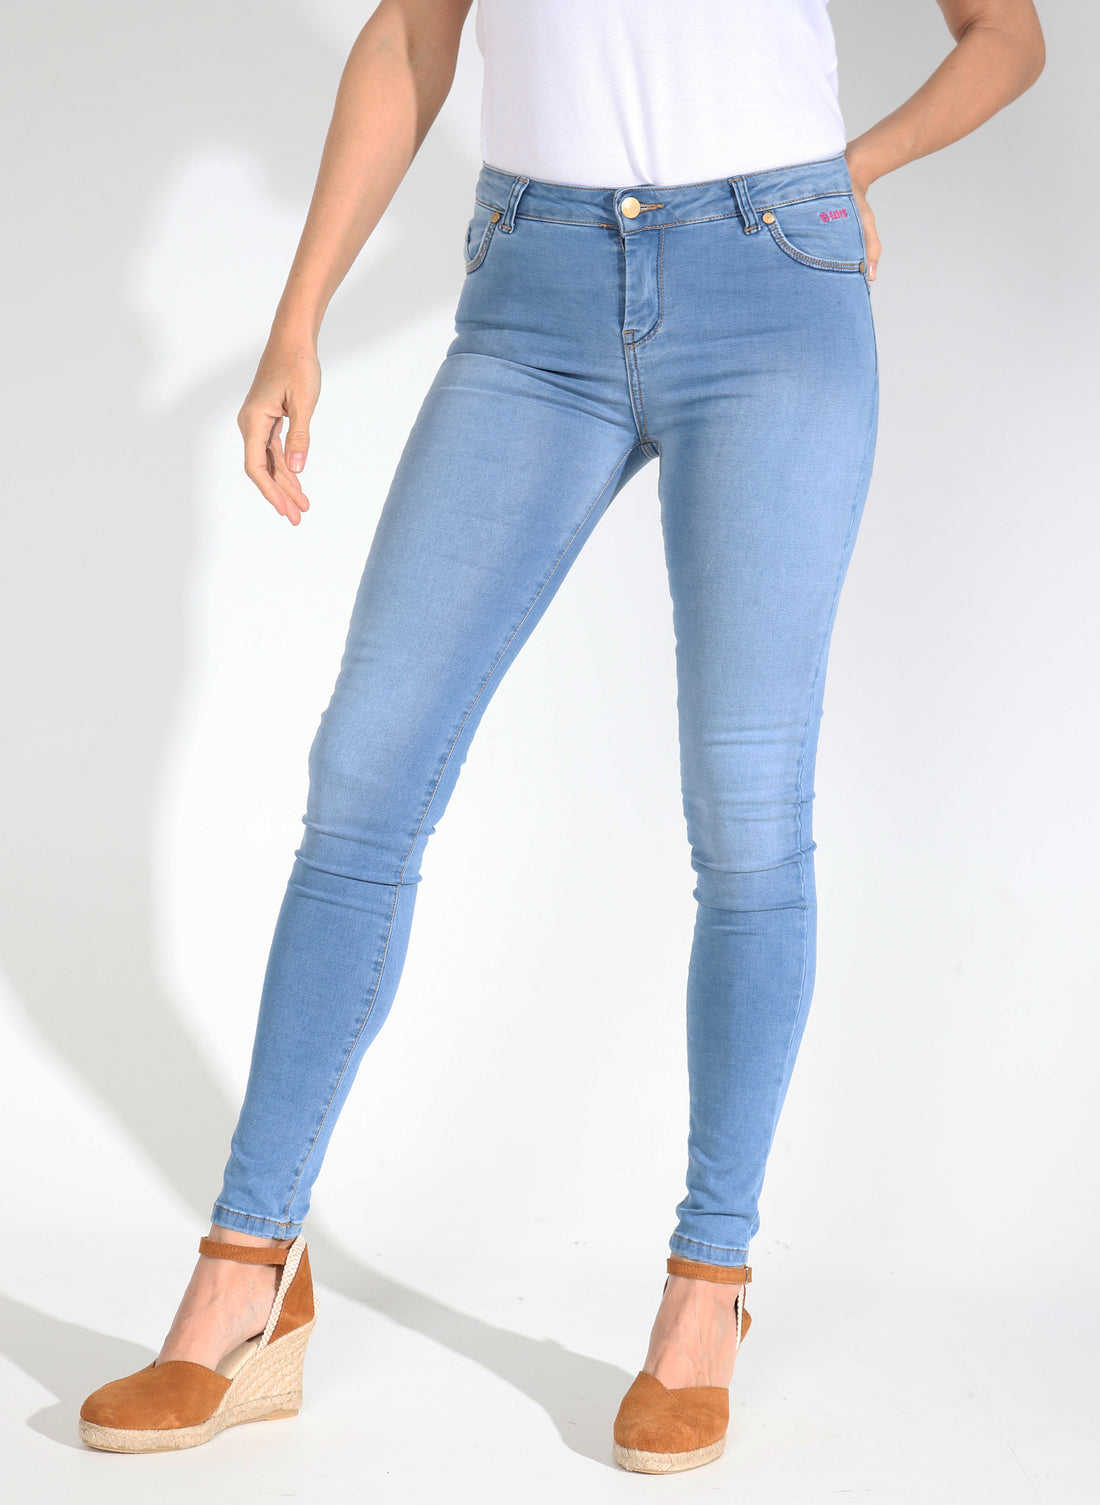 Gray Elastic Jeans Woman Spain